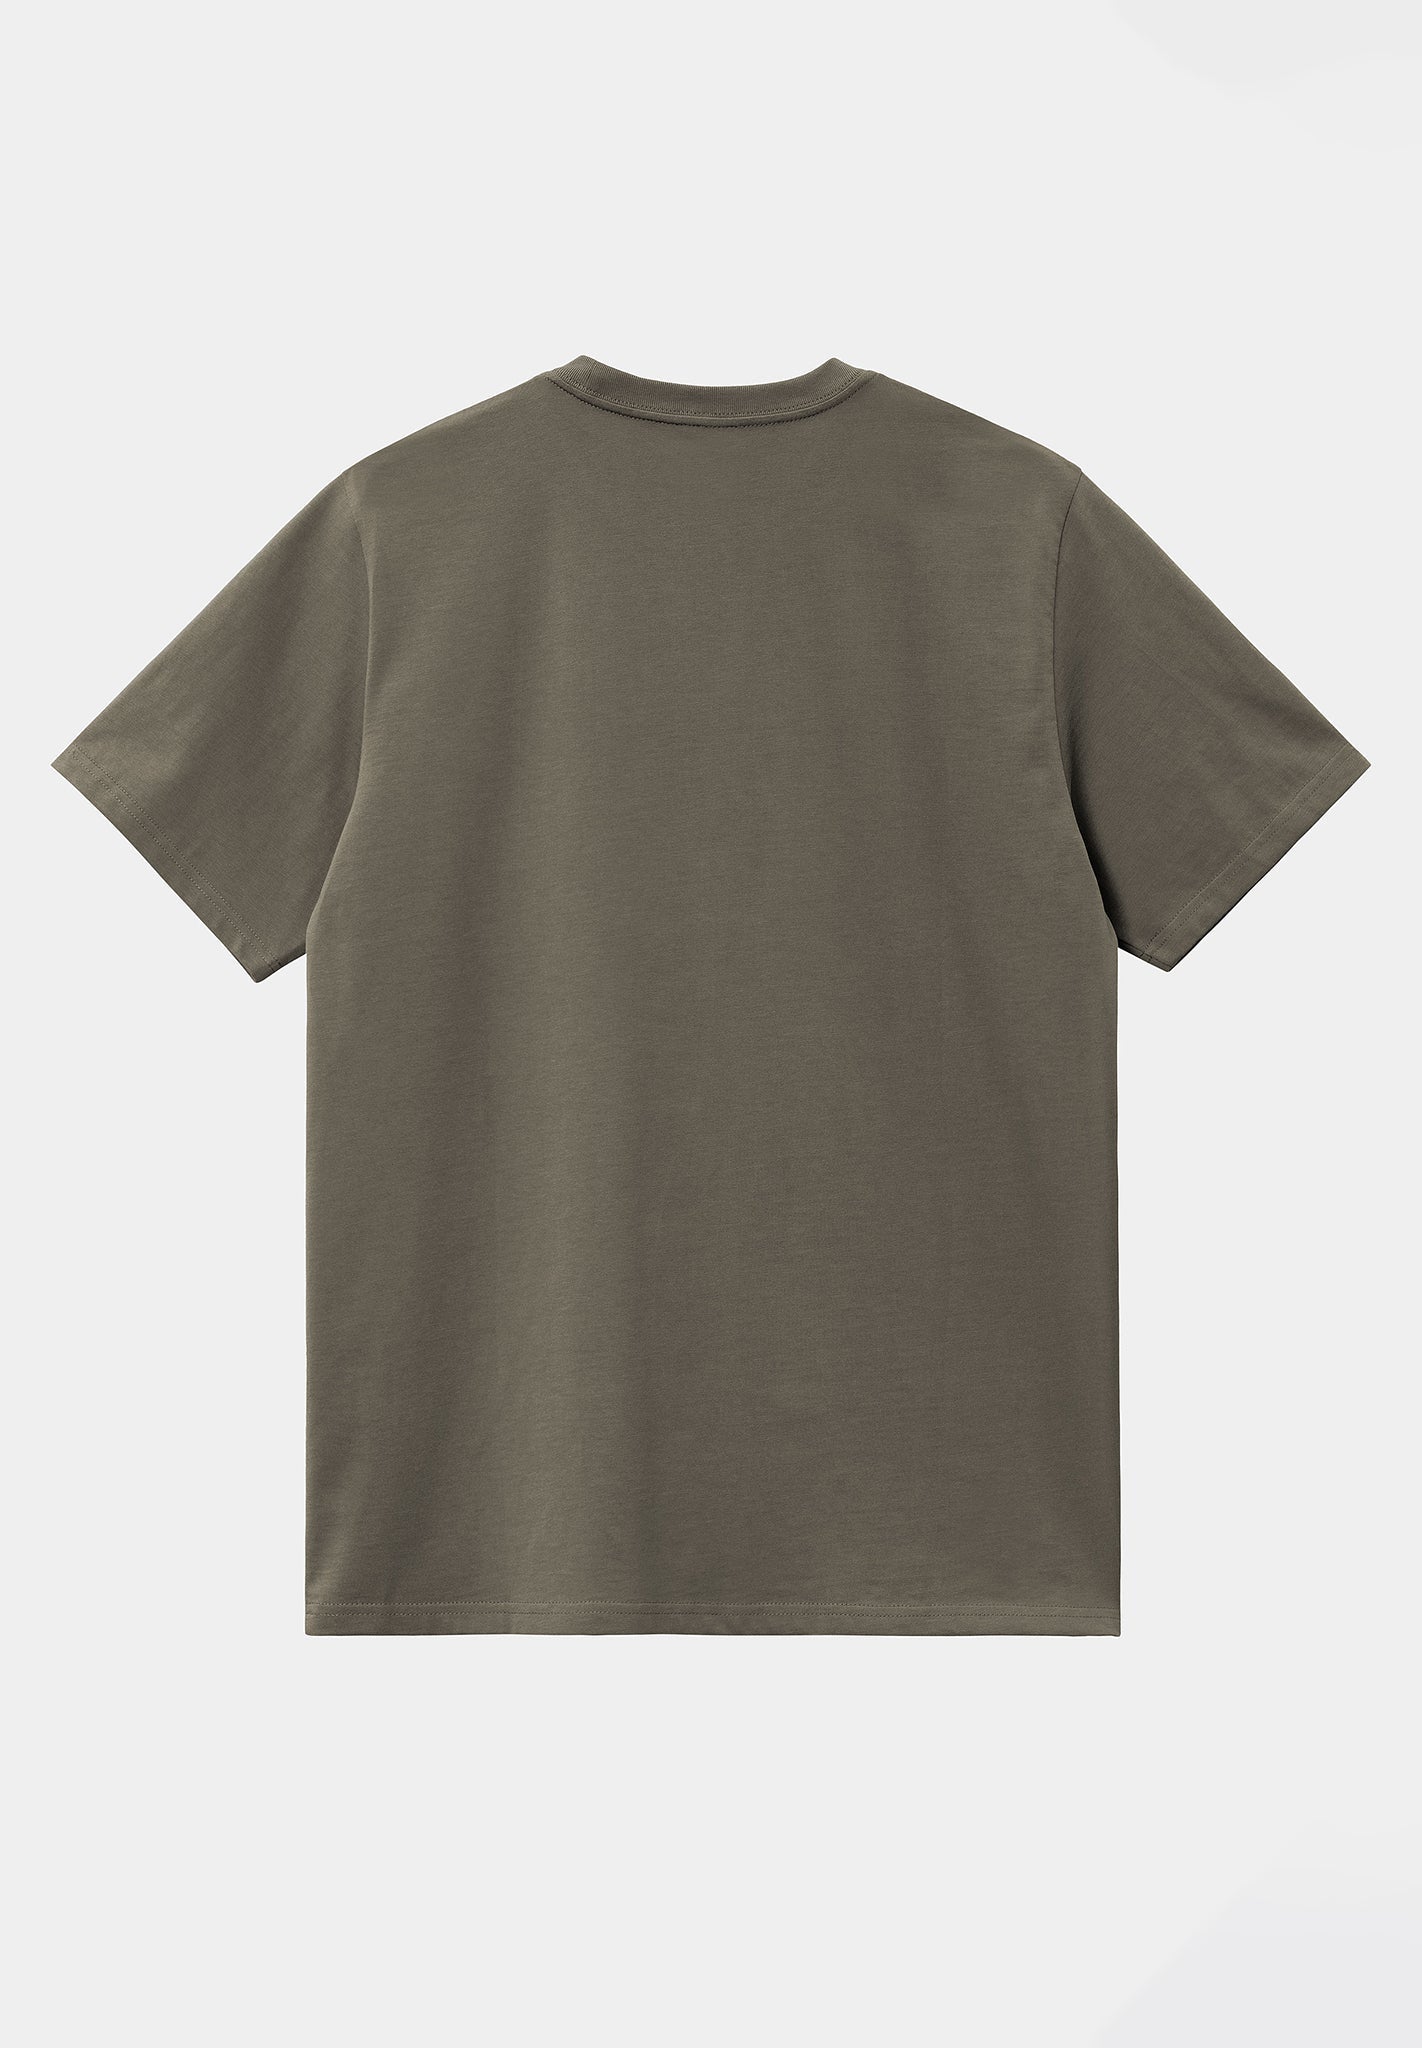 CARHARTT WIP - S/S Pocket T - Shirt - BACKYARD